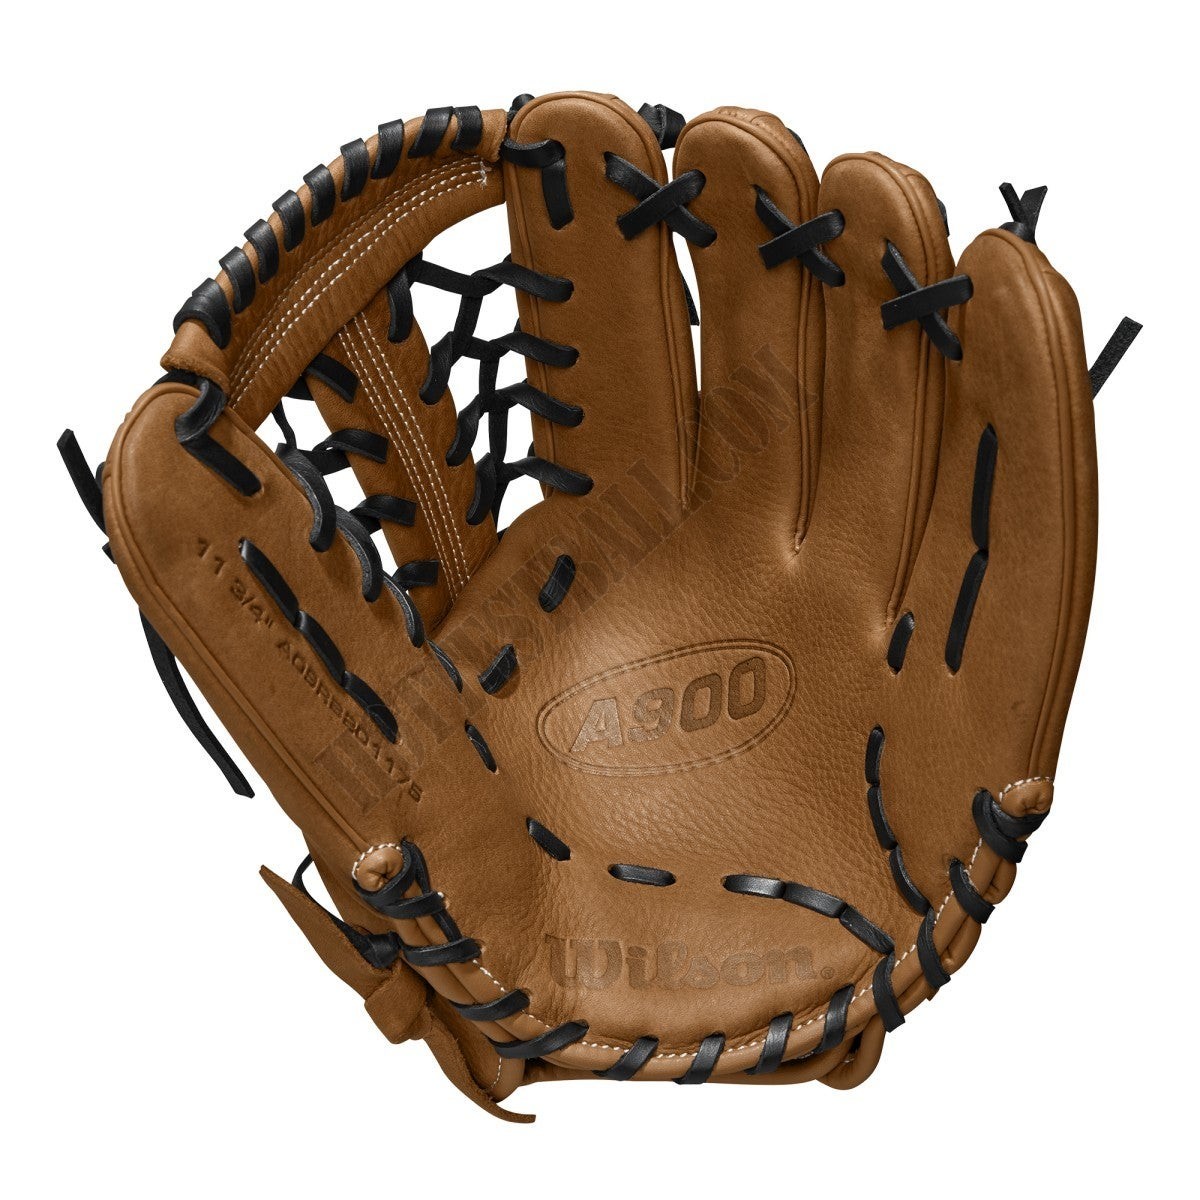 2020 A900 11.75" Baseball Glove ● Wilson Promotions - -2